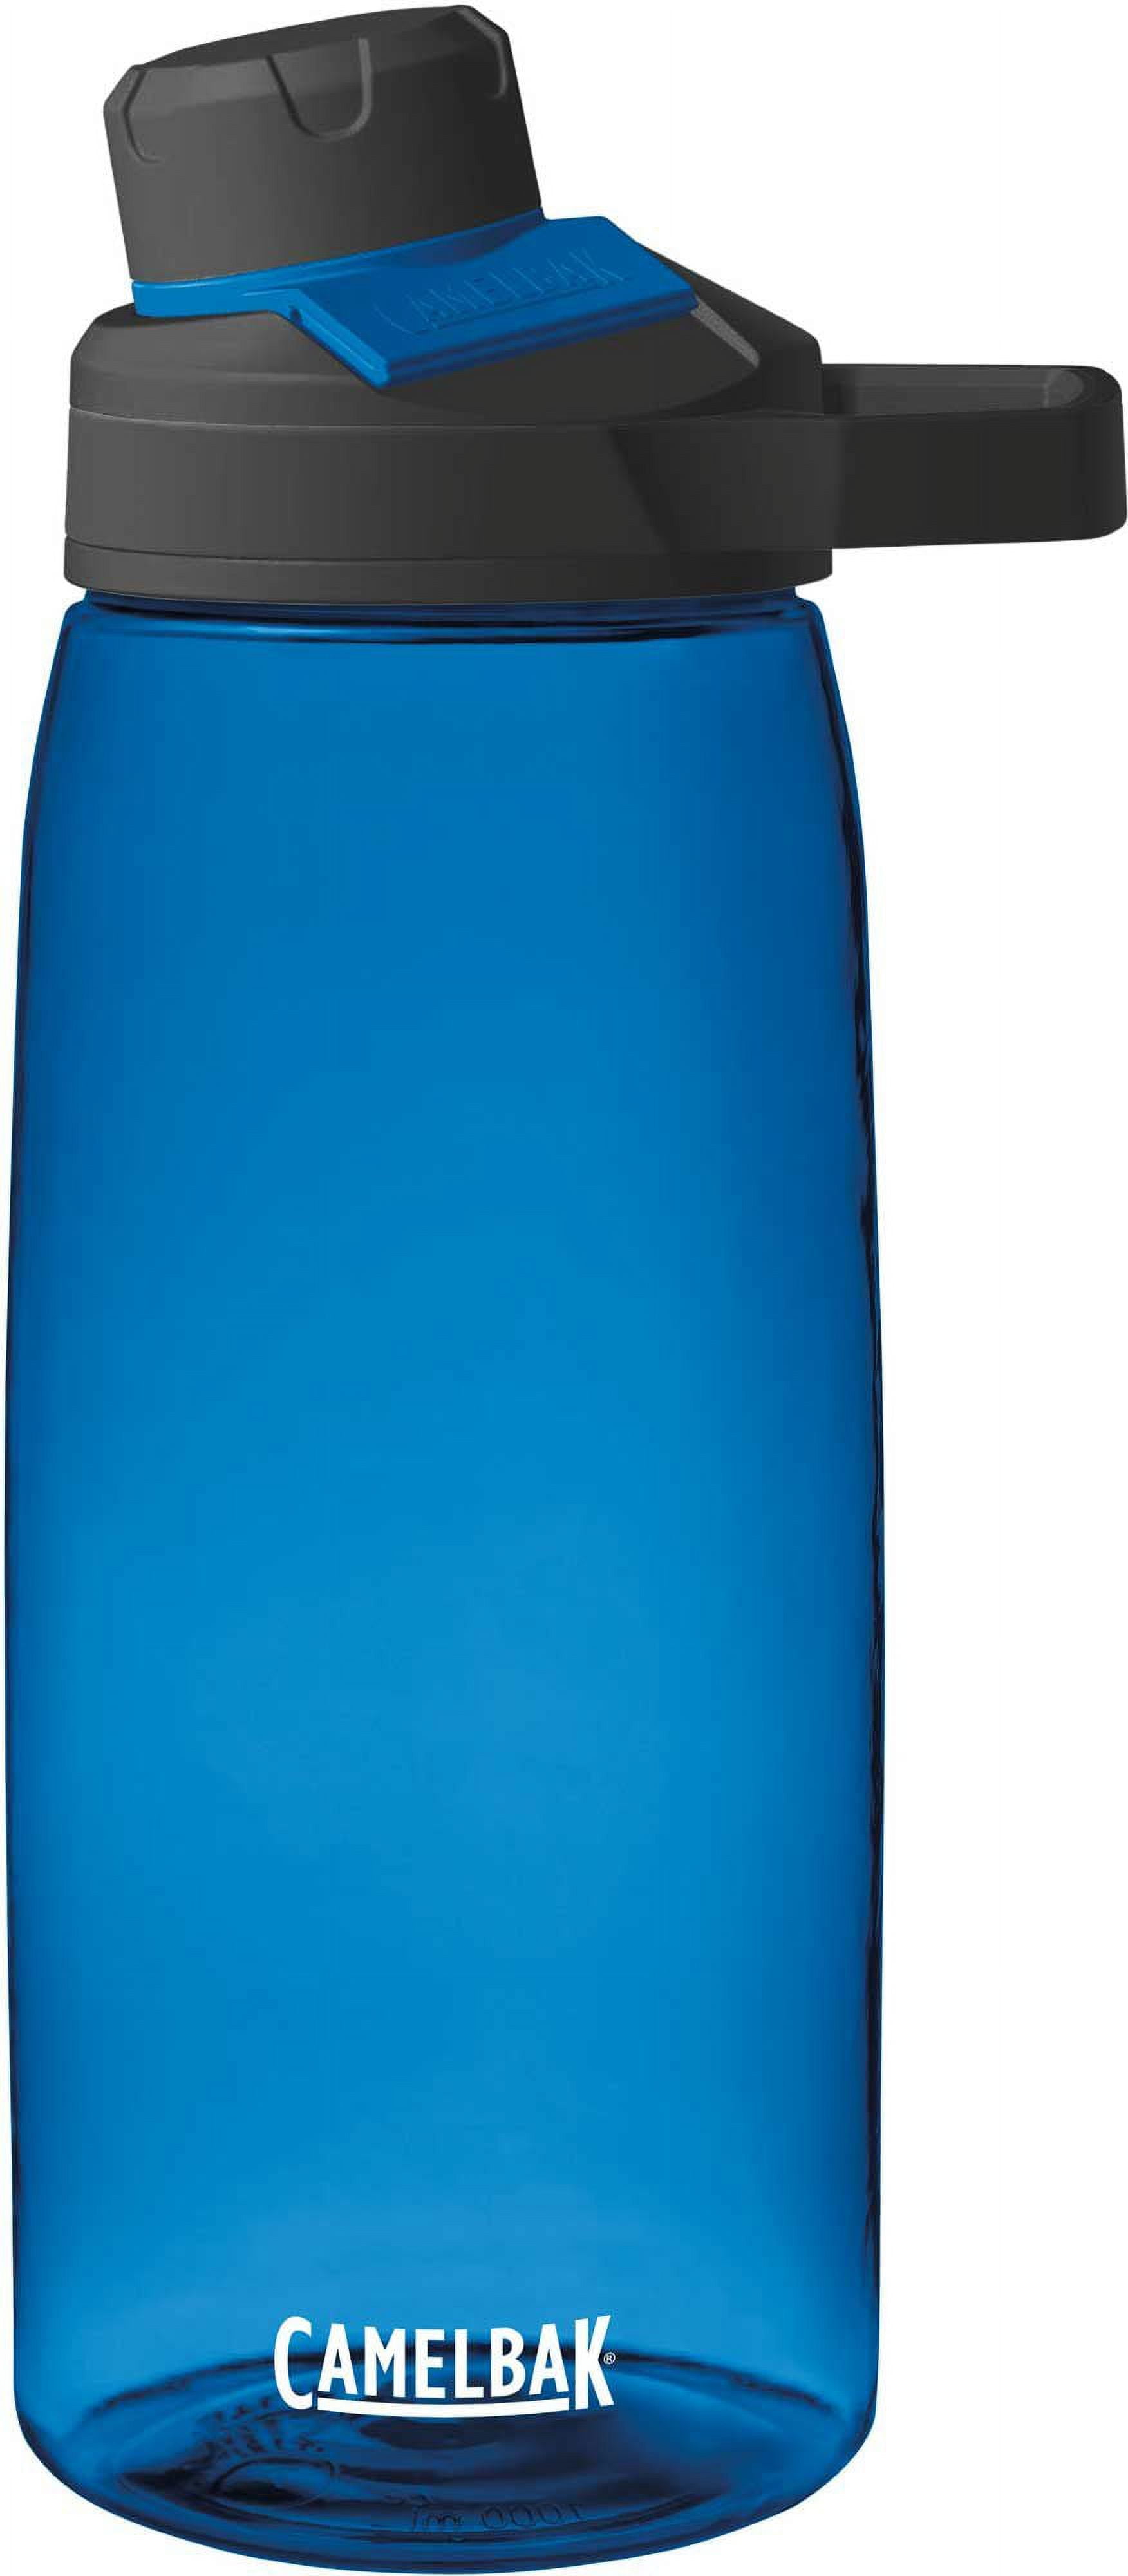 REVIEW: CamelBak ARC Quick Grip Handheld Water Bottle – Mile Long Legs